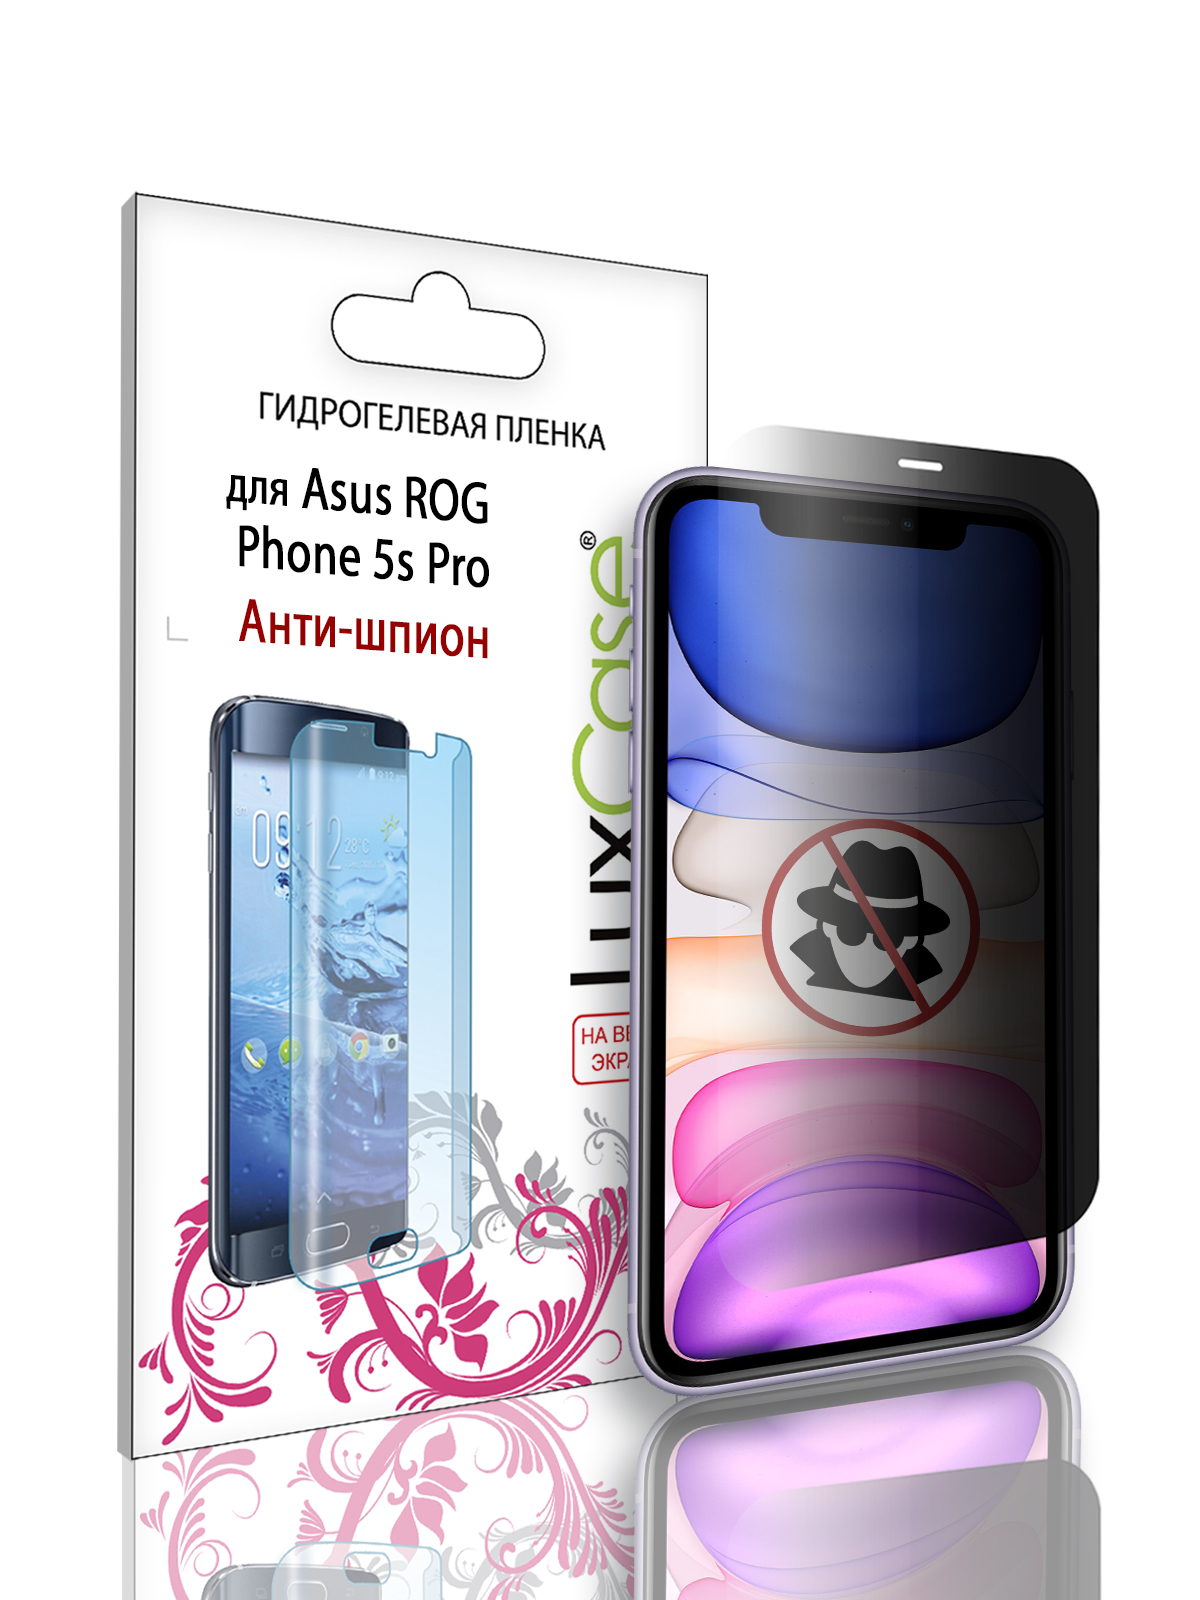 Гидрогелевая пленка LuxCase для Asus ROG Phone 5s Pro, Антишпион, 0,14 мм, Front гидрогелевая защитная пленка антишпион anty spy анти шпион для ulefone mix матовая